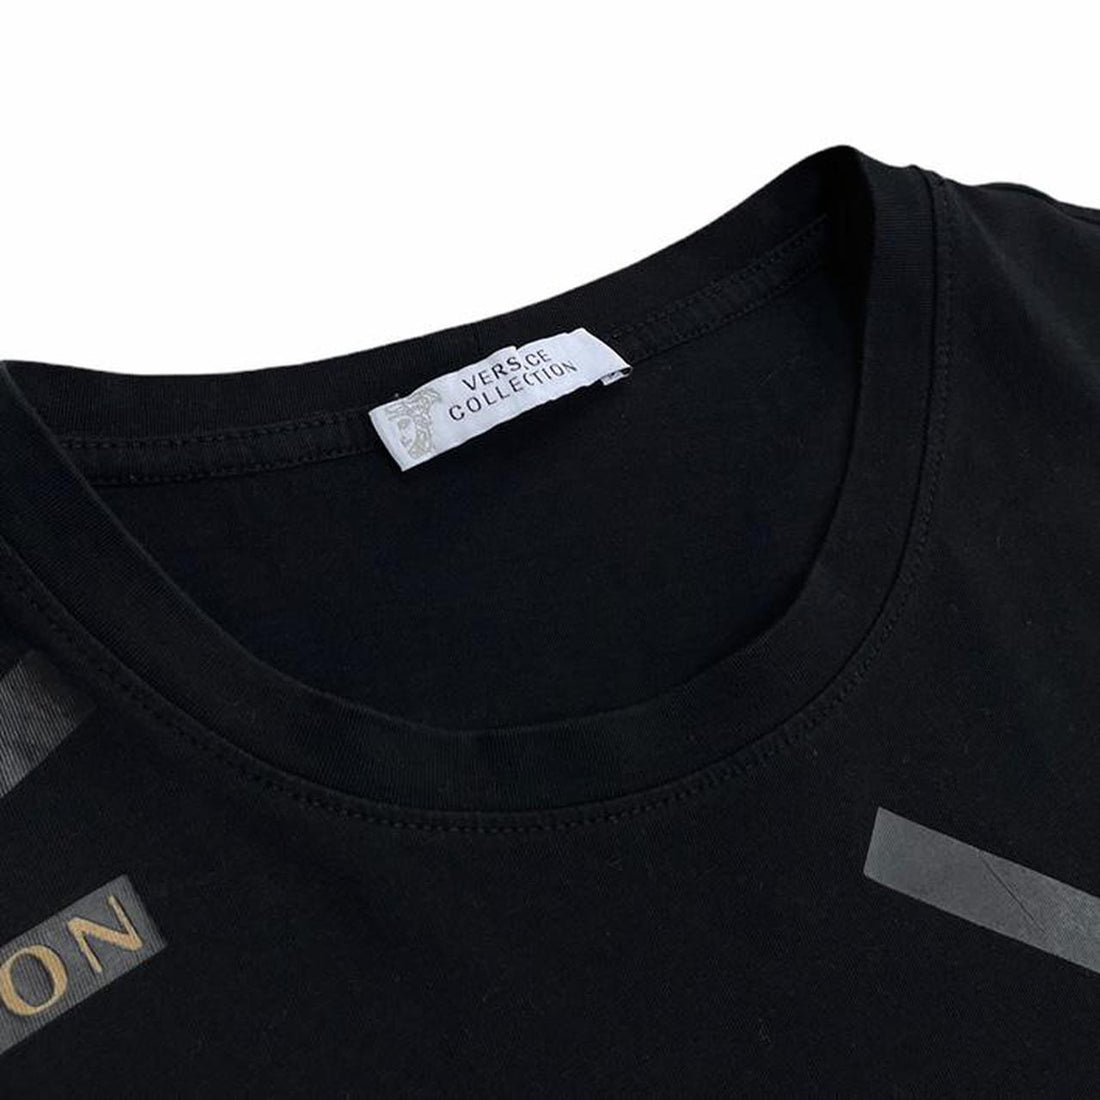 Versace black logo t-shirt